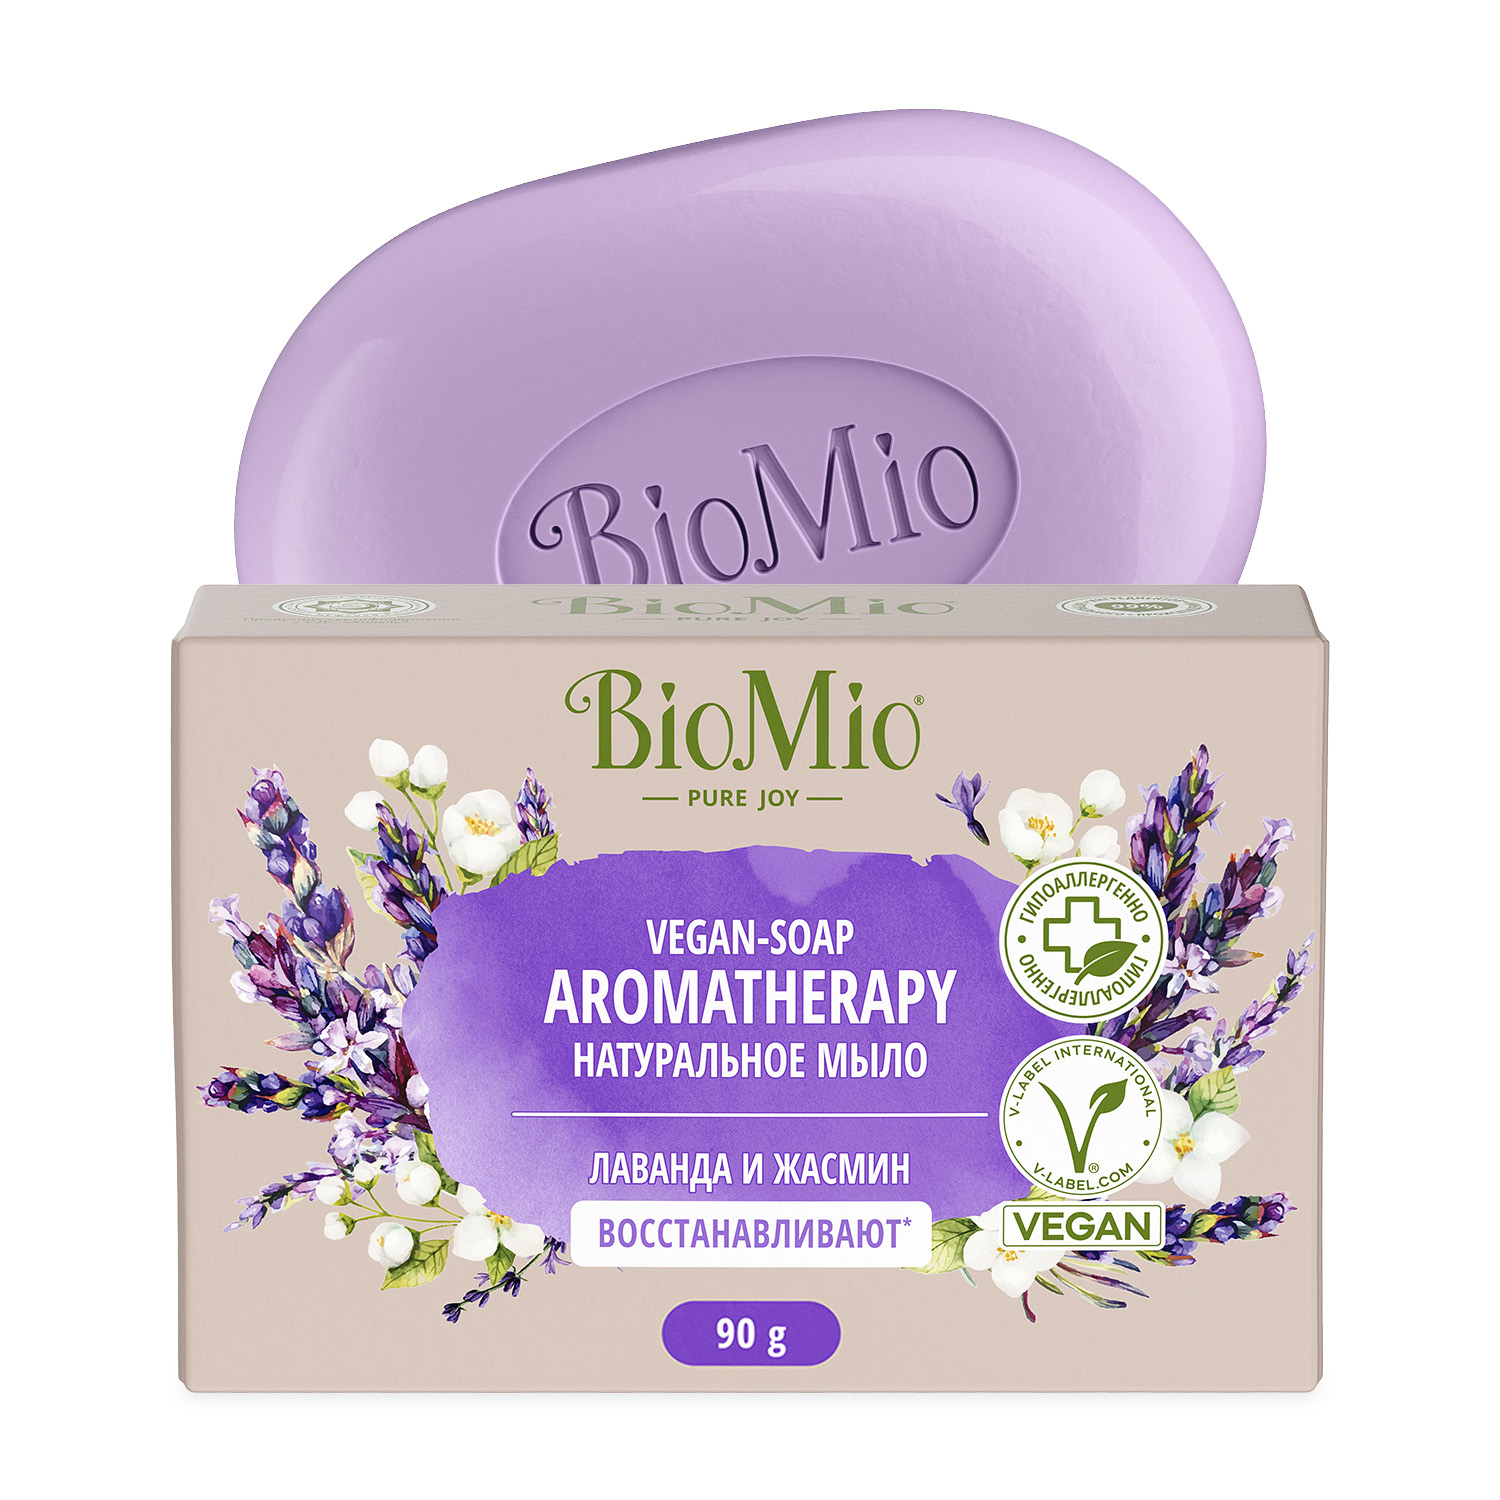 BioMio Натуральное мыло Лаванда и жасмин Vegan Soap Aromatherapy, 90 г (BioMio, Мыло)